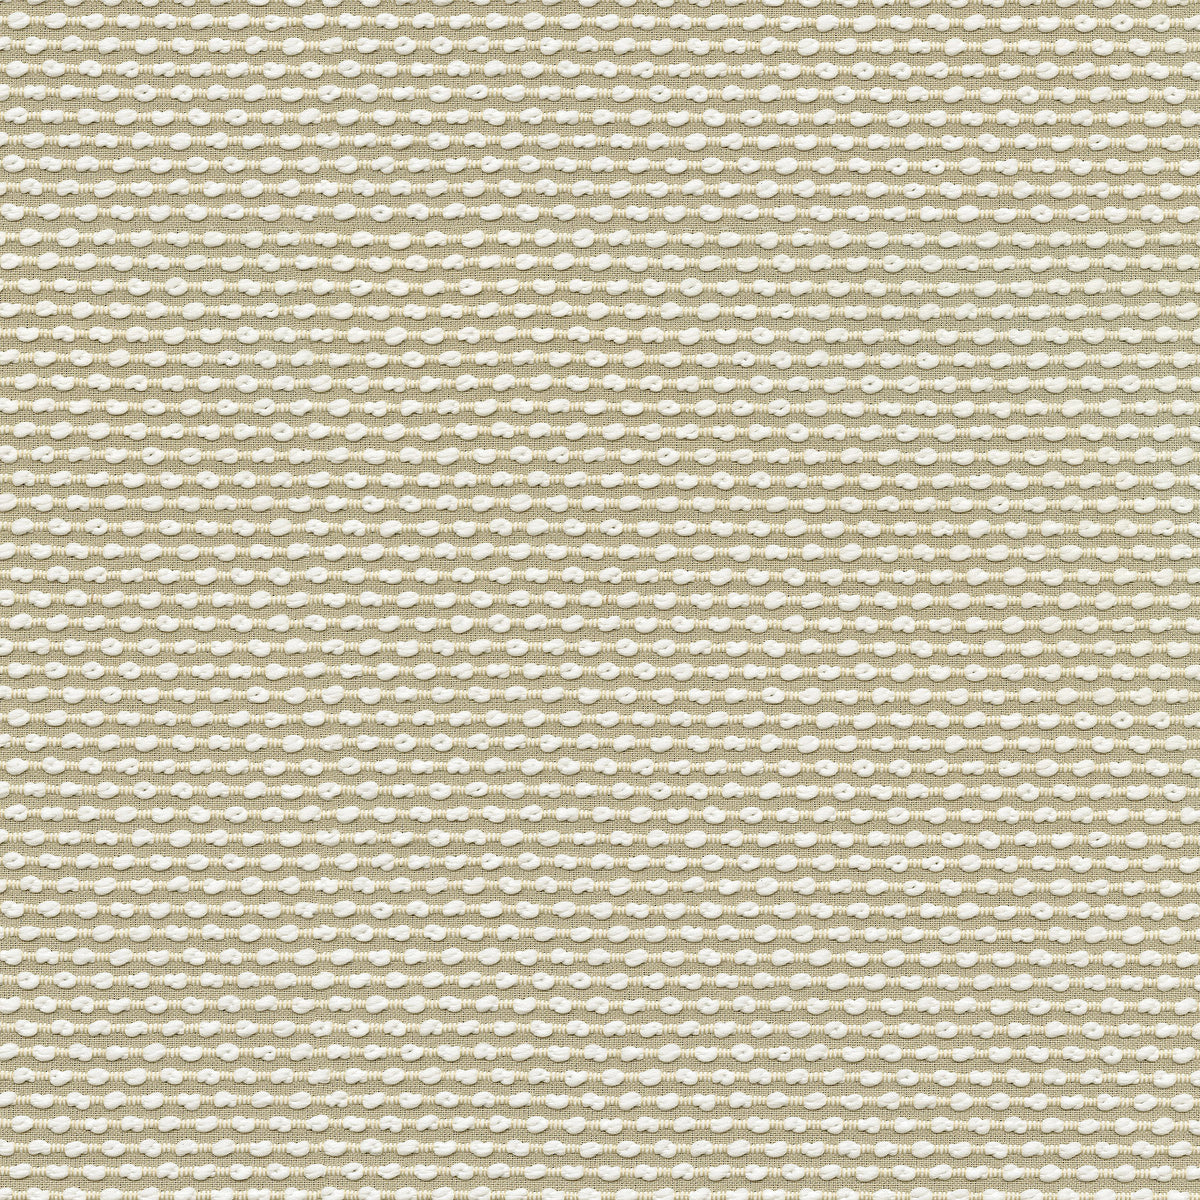 P/K Lifestyles Breuer - Parchment 411510 Upholstery Fabric